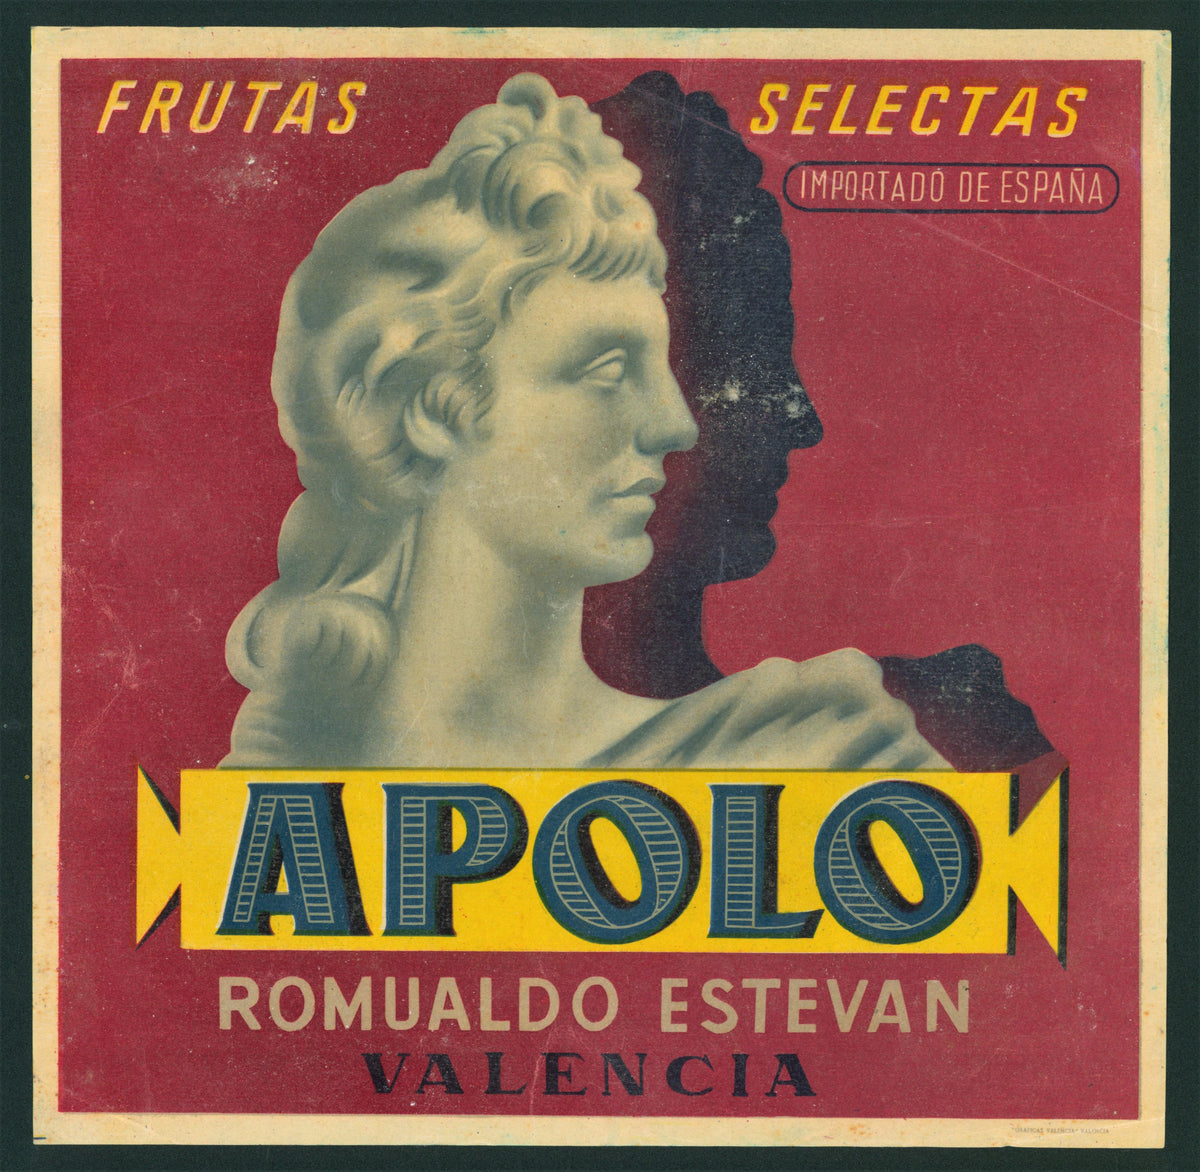 Spanish Crate Label 1-3 - Authentic Vintage Antique Print